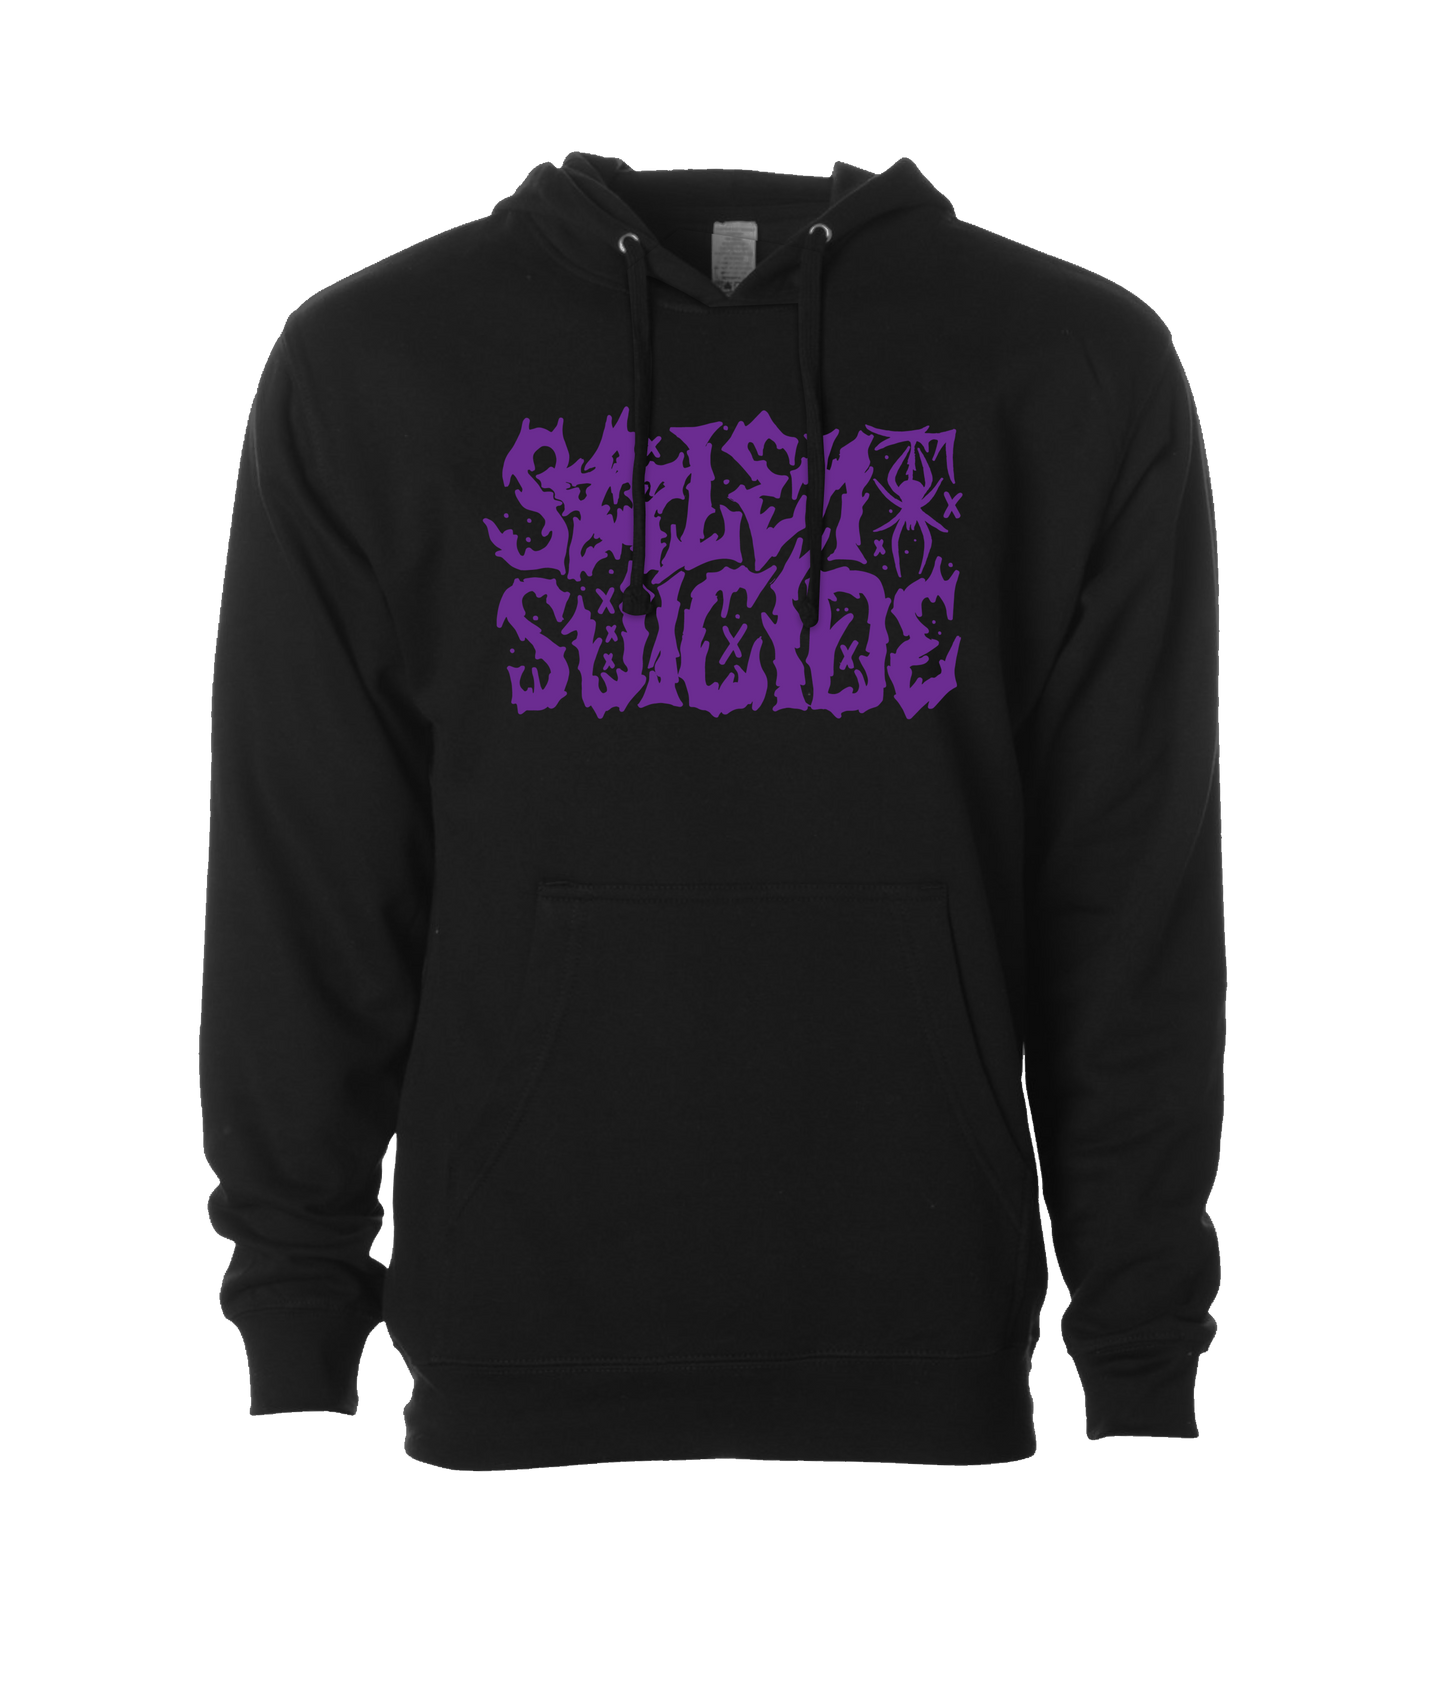 Salem Suicide - Logo Purple - Black Hoodie